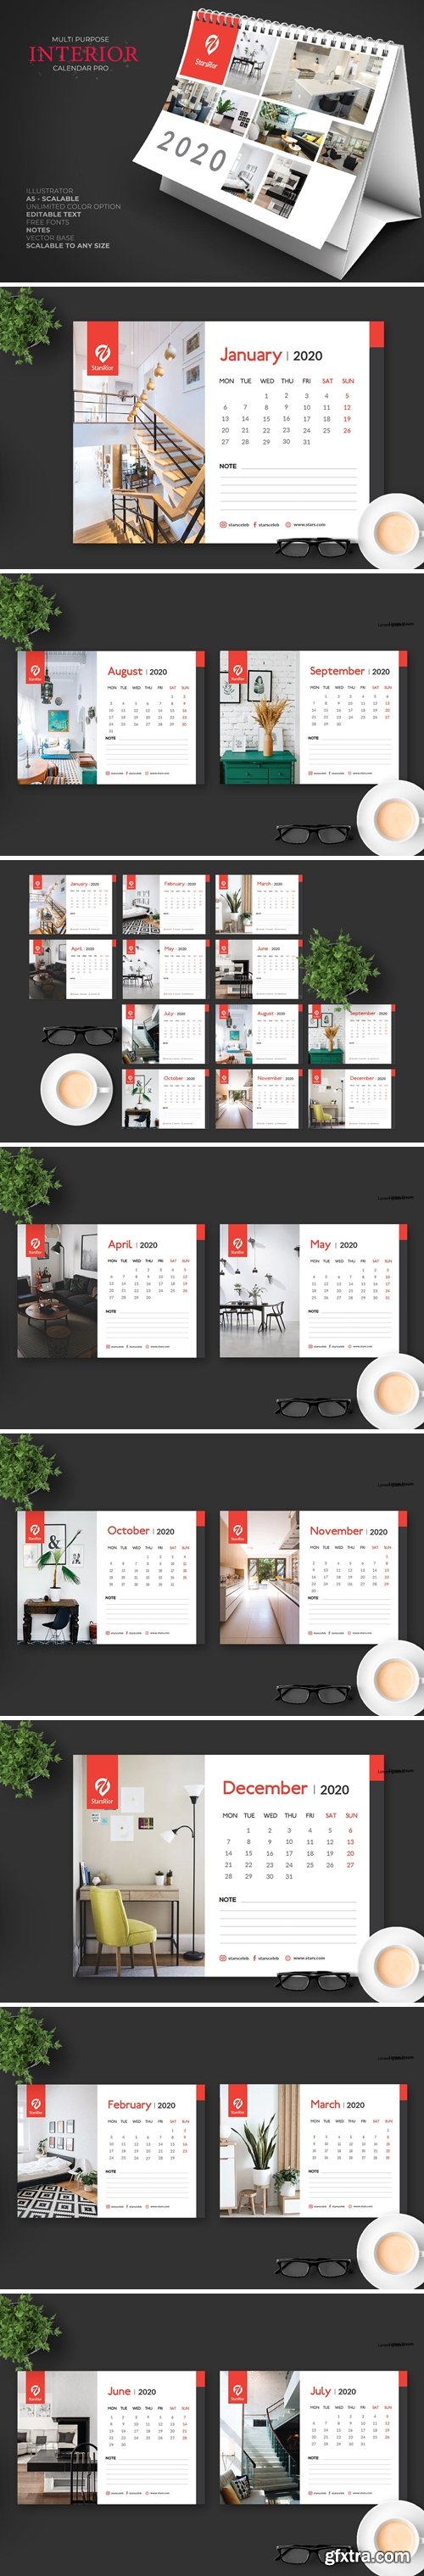 2020 Furniture/Interior Calendar Desk Pro